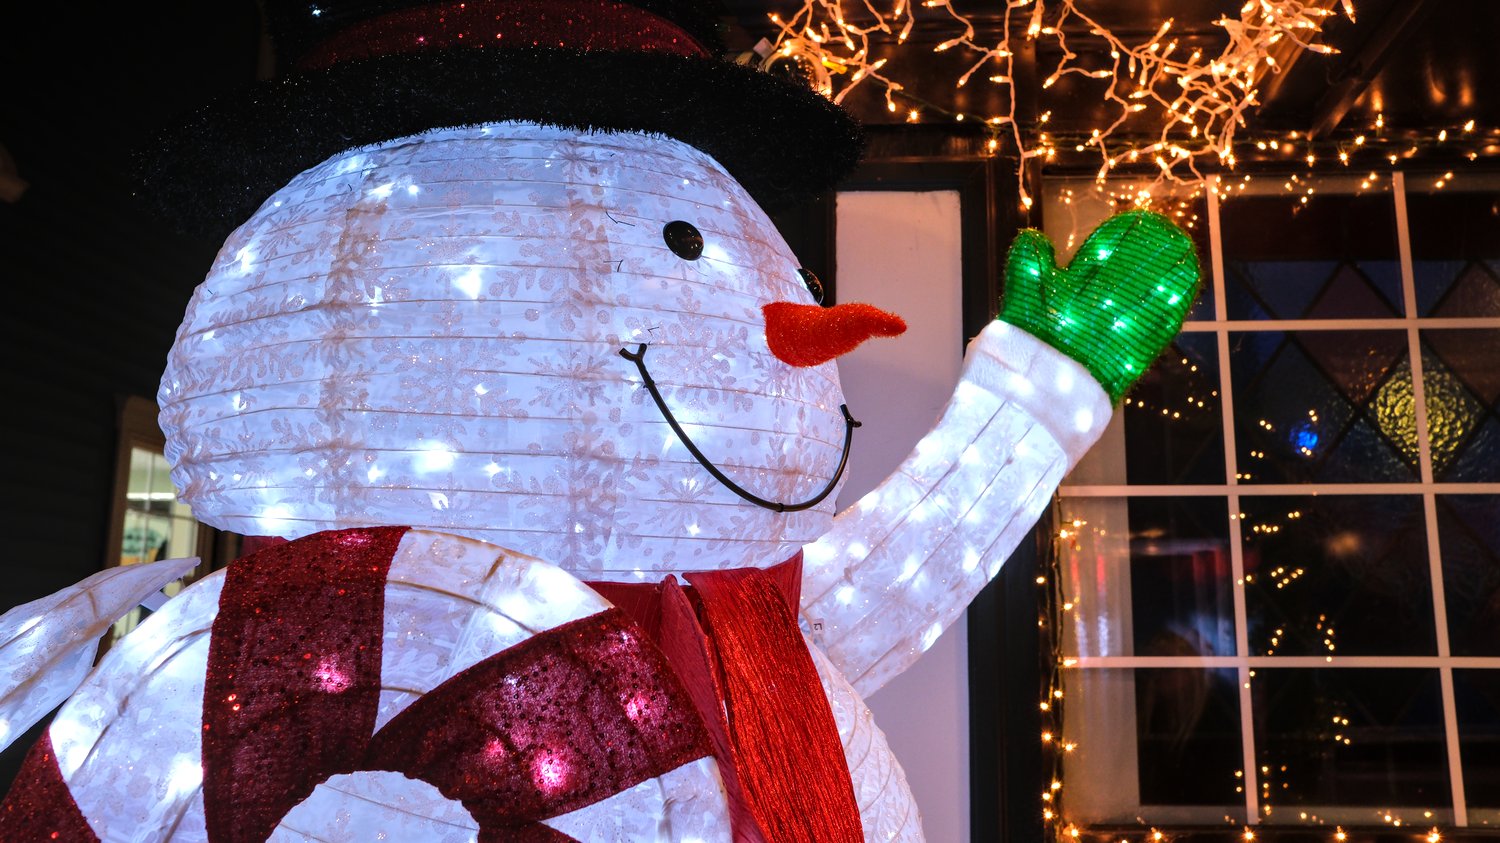 Lighted snowman display.